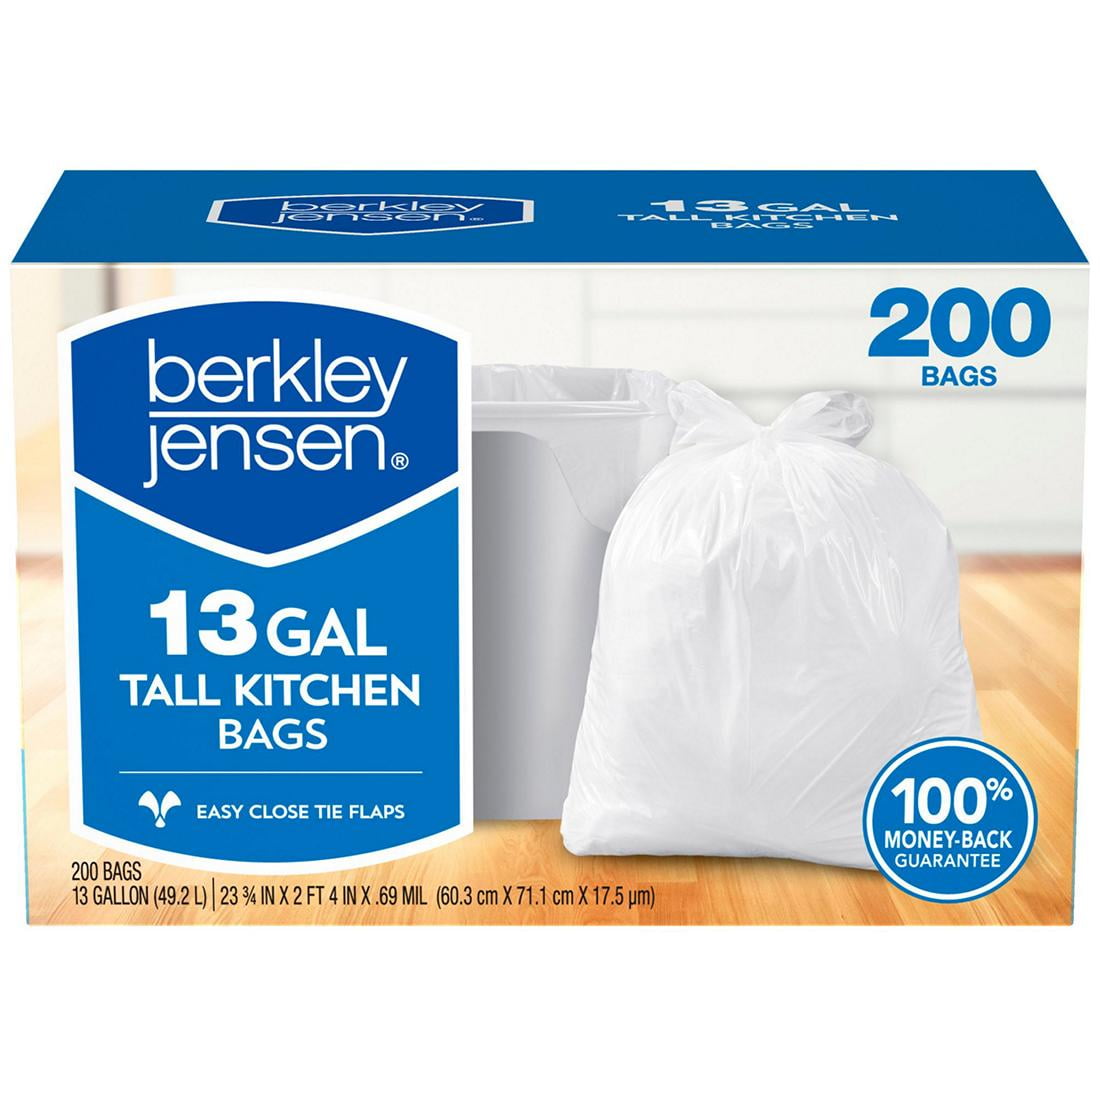 Berkley Jensen Flap Tie Kitchen Bags, 300 ct./8 gal.